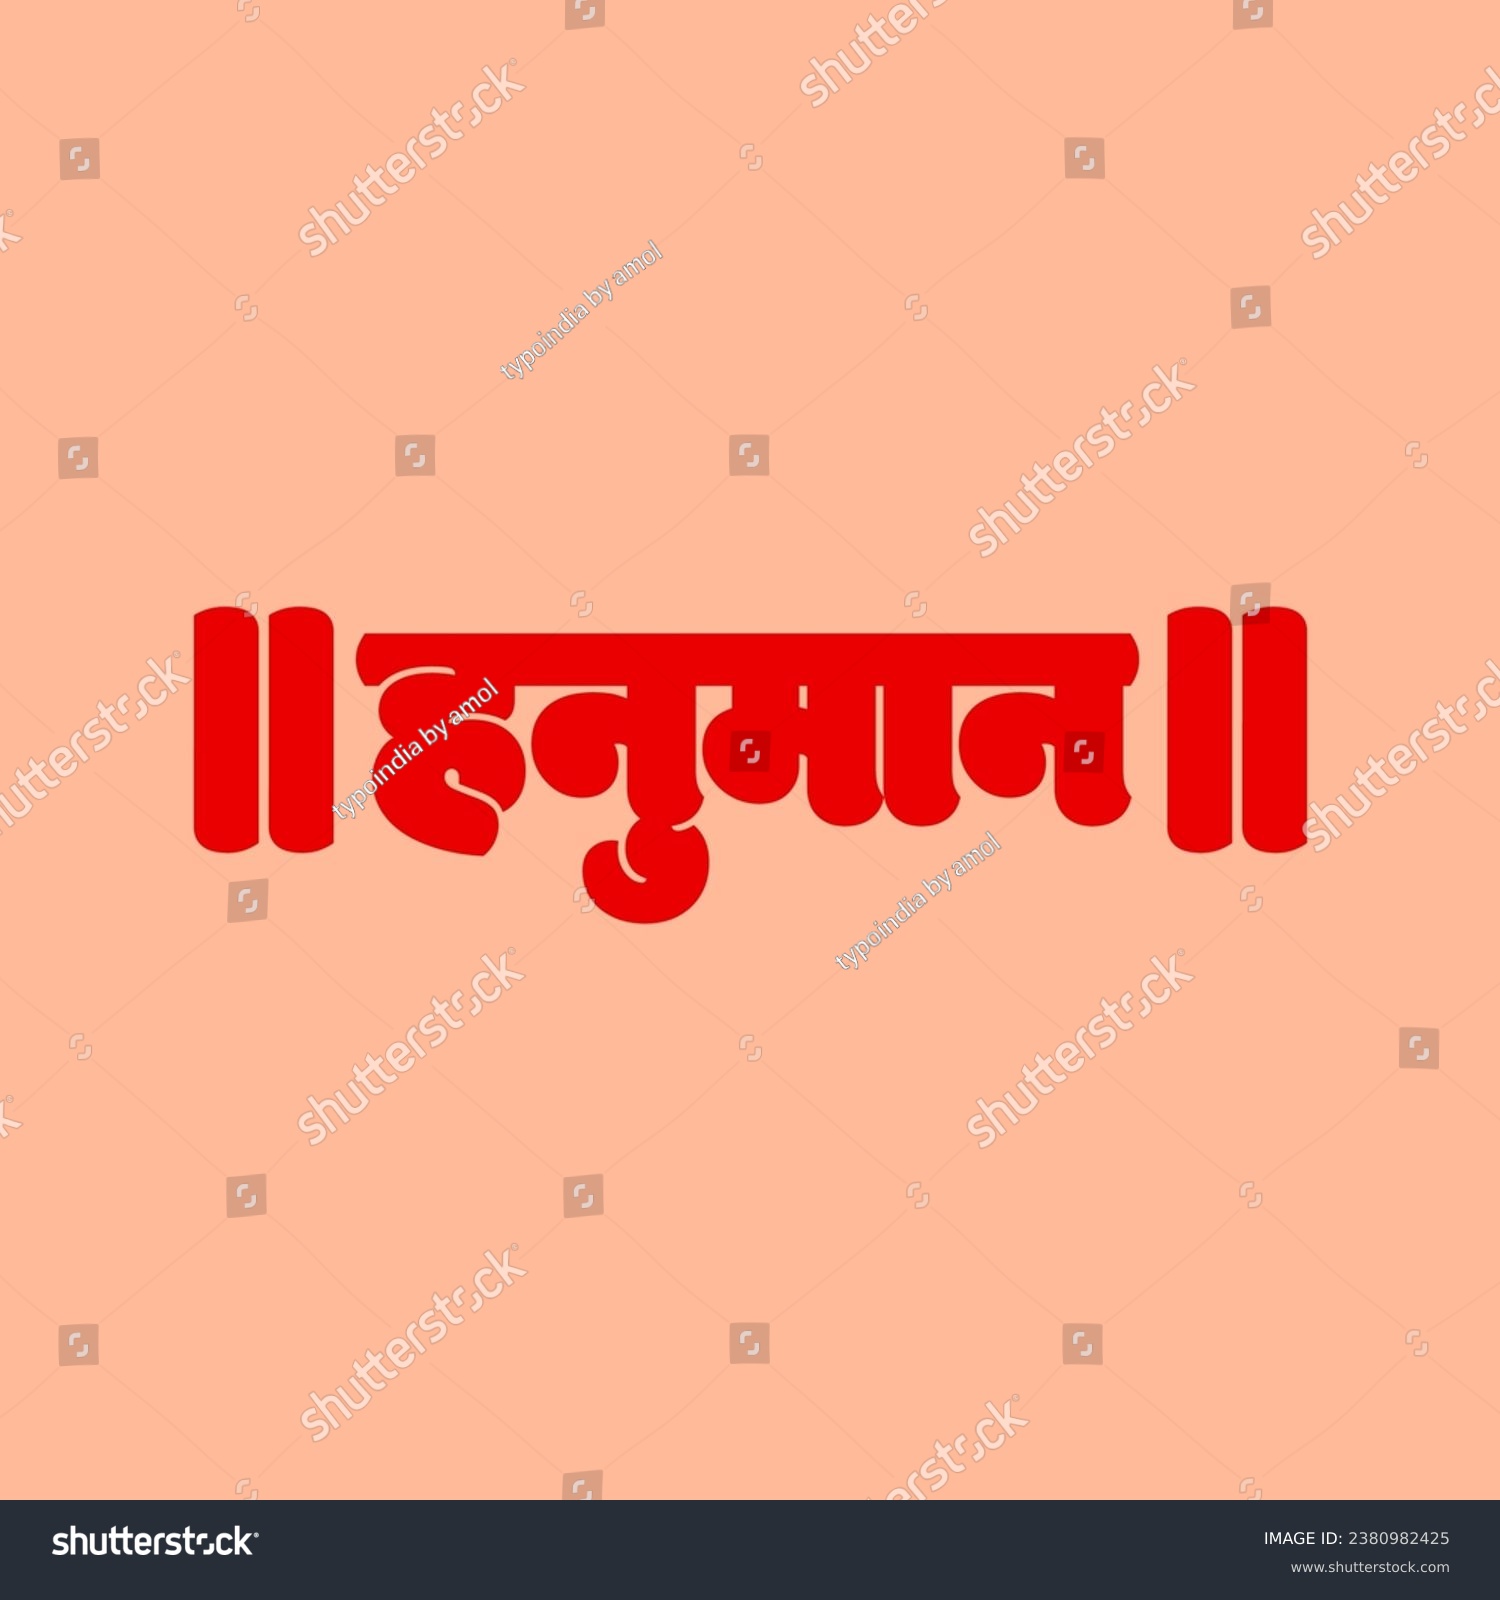 SVG of Lord Hanuman written in Devanagari calligraphy. svg